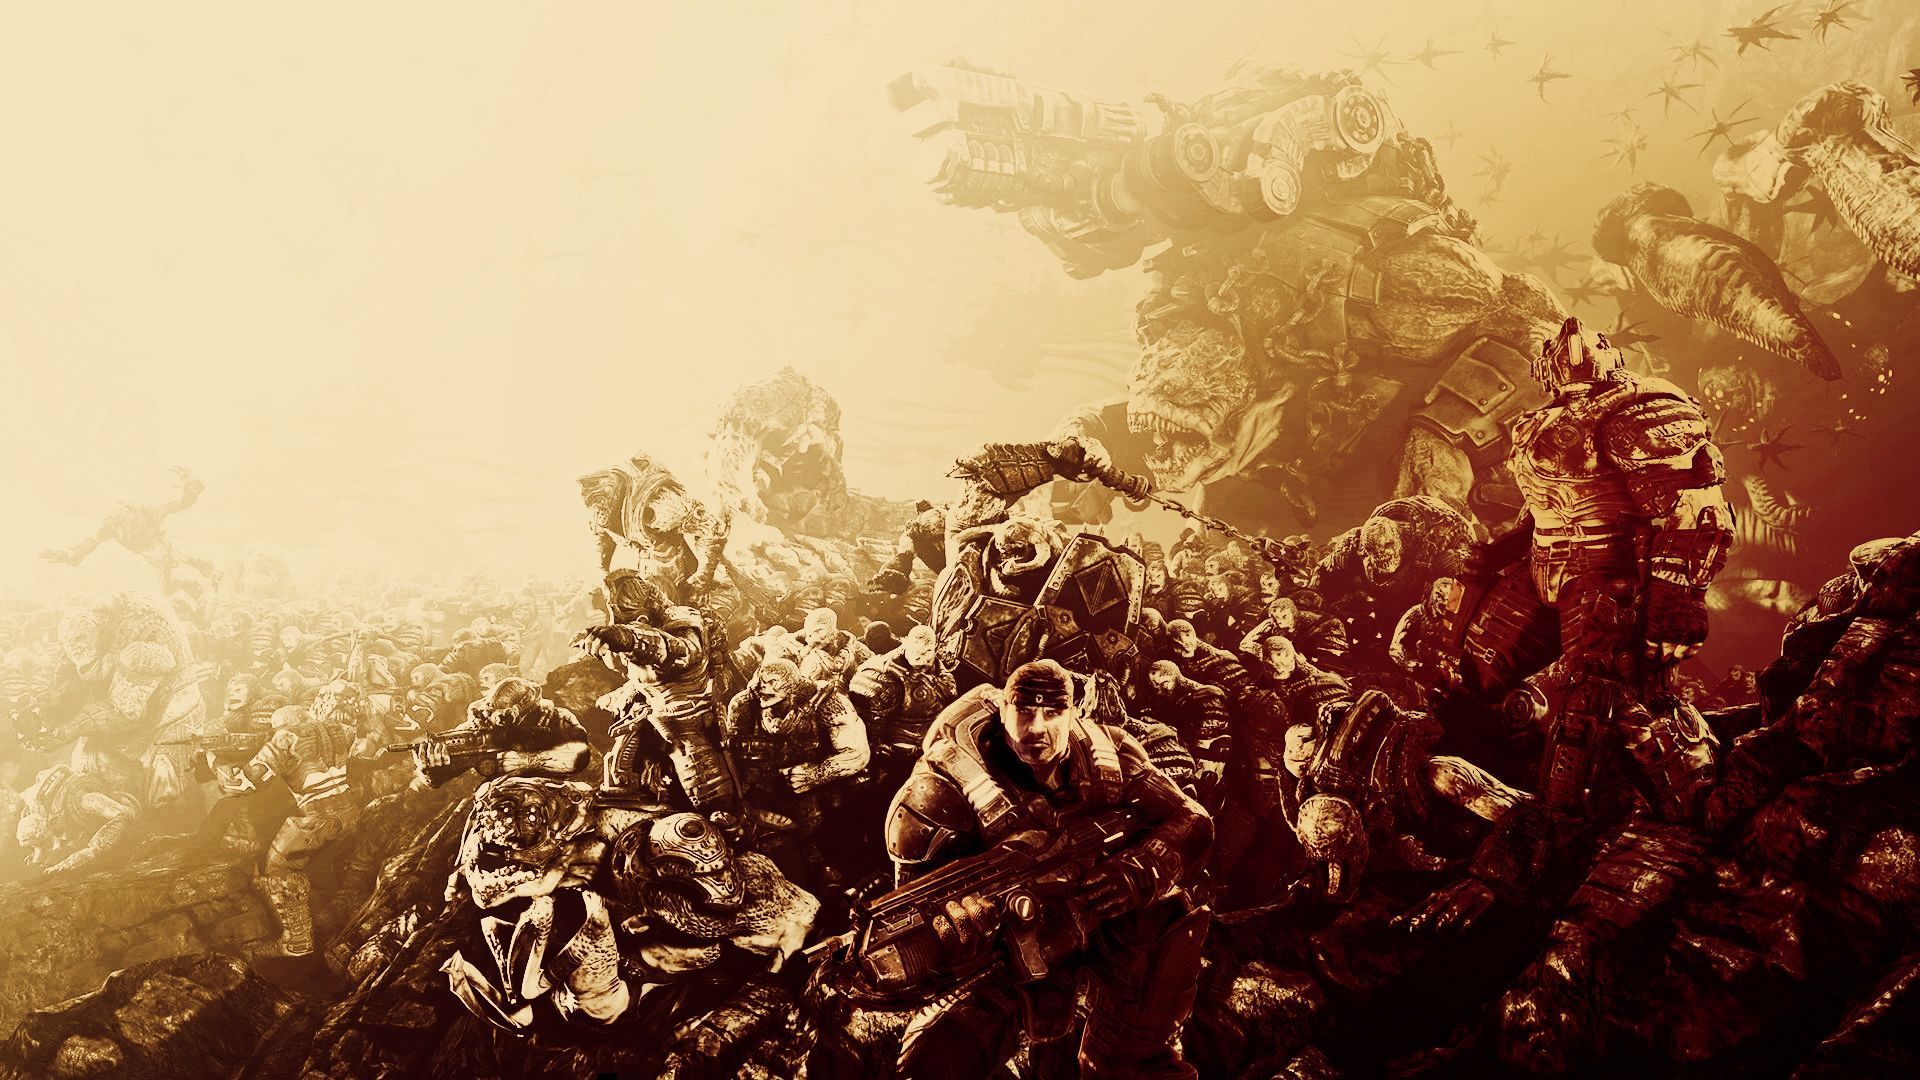 Gears-of-War-3-Artwork-Wallpaper-HD.jpg